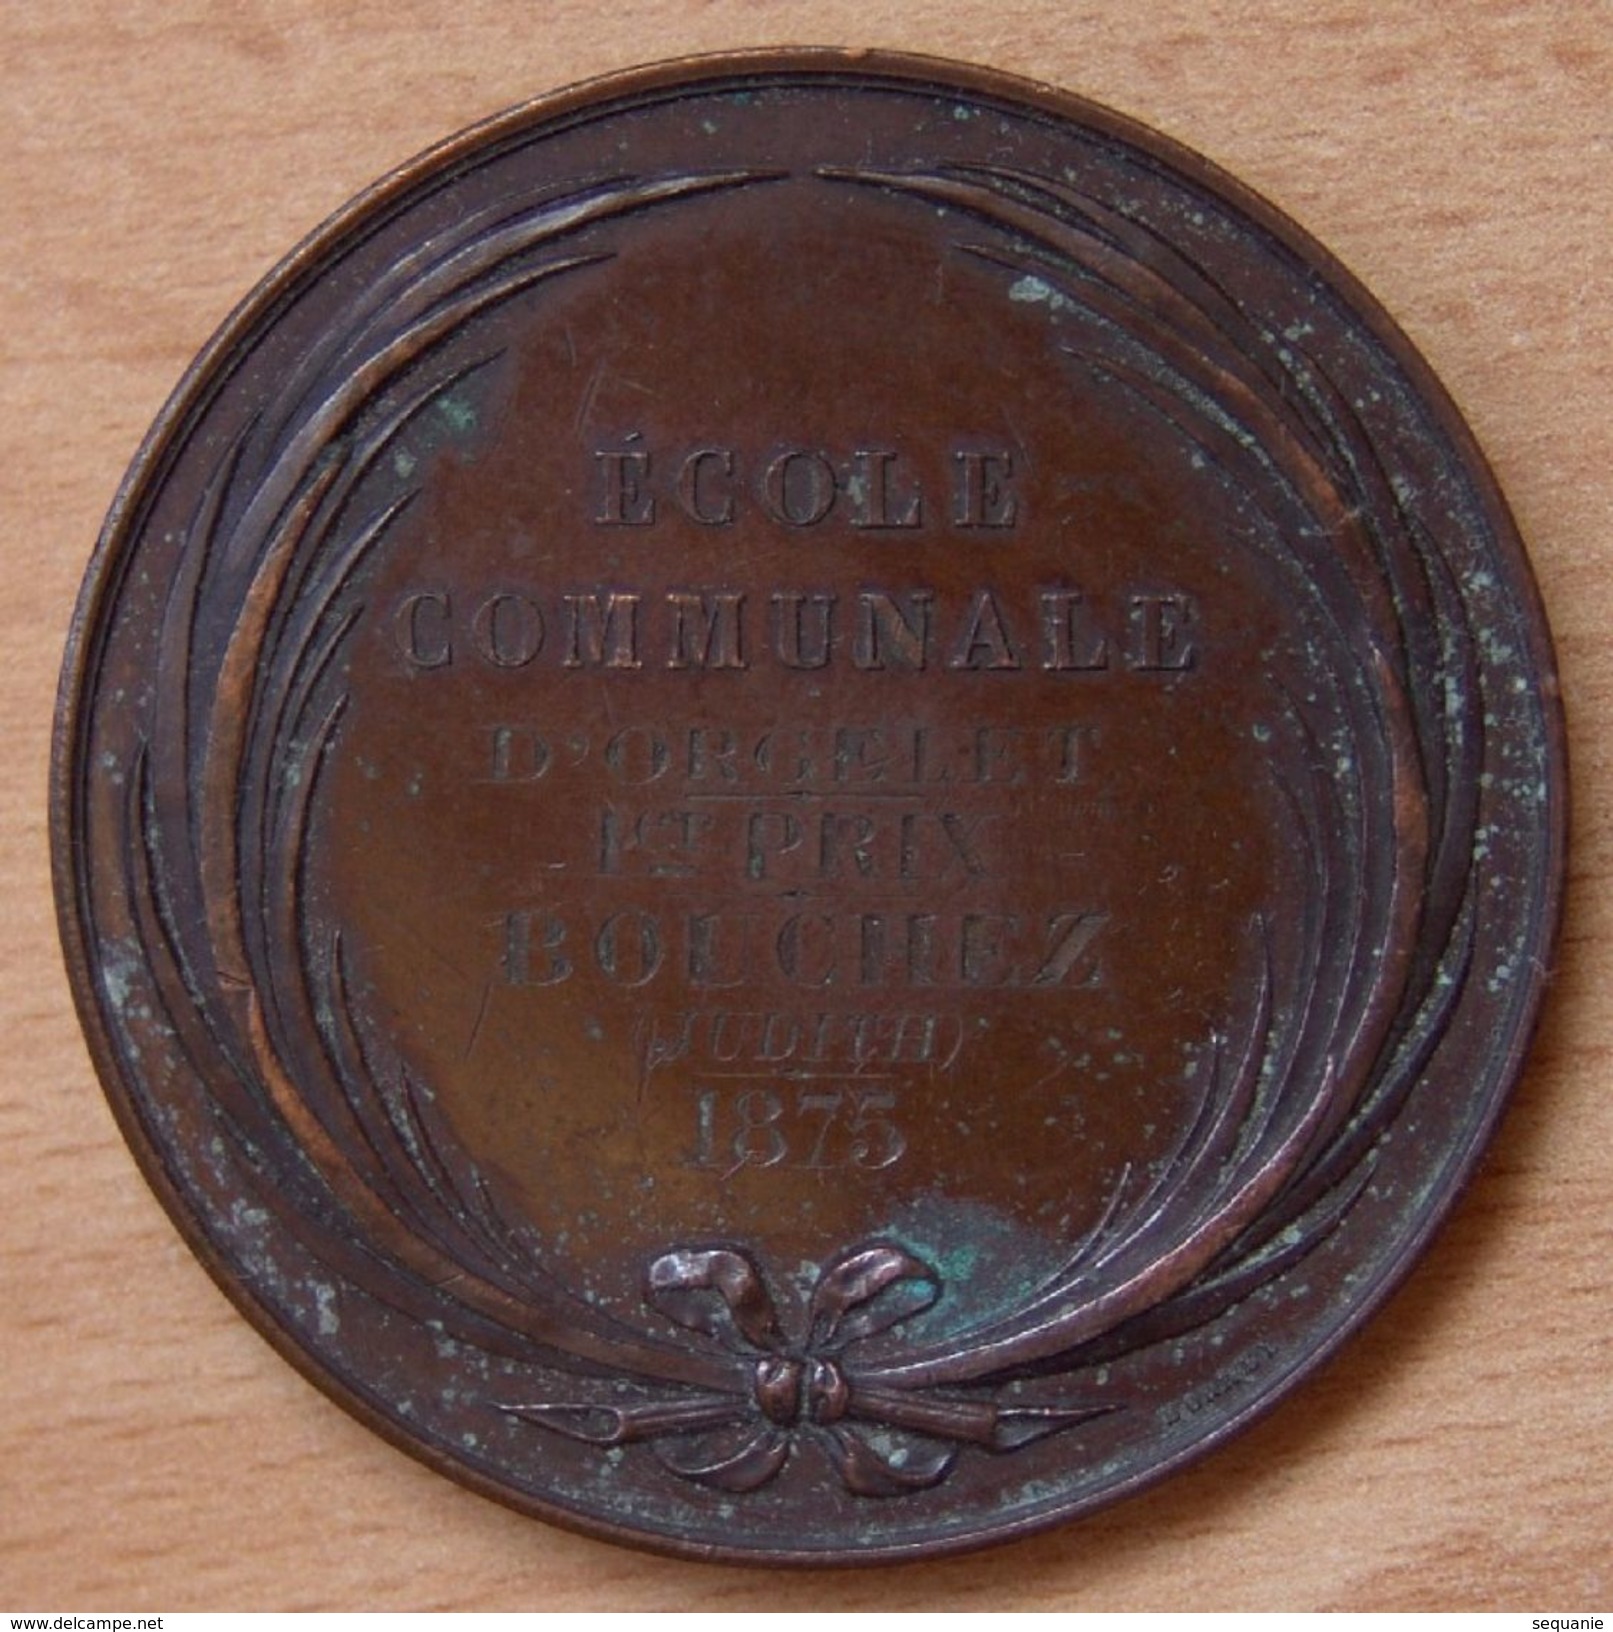 Médaille Ecole Communale D'Orgelet (Jura) 1 Er Prix B J 1875 - Professionali / Di Società